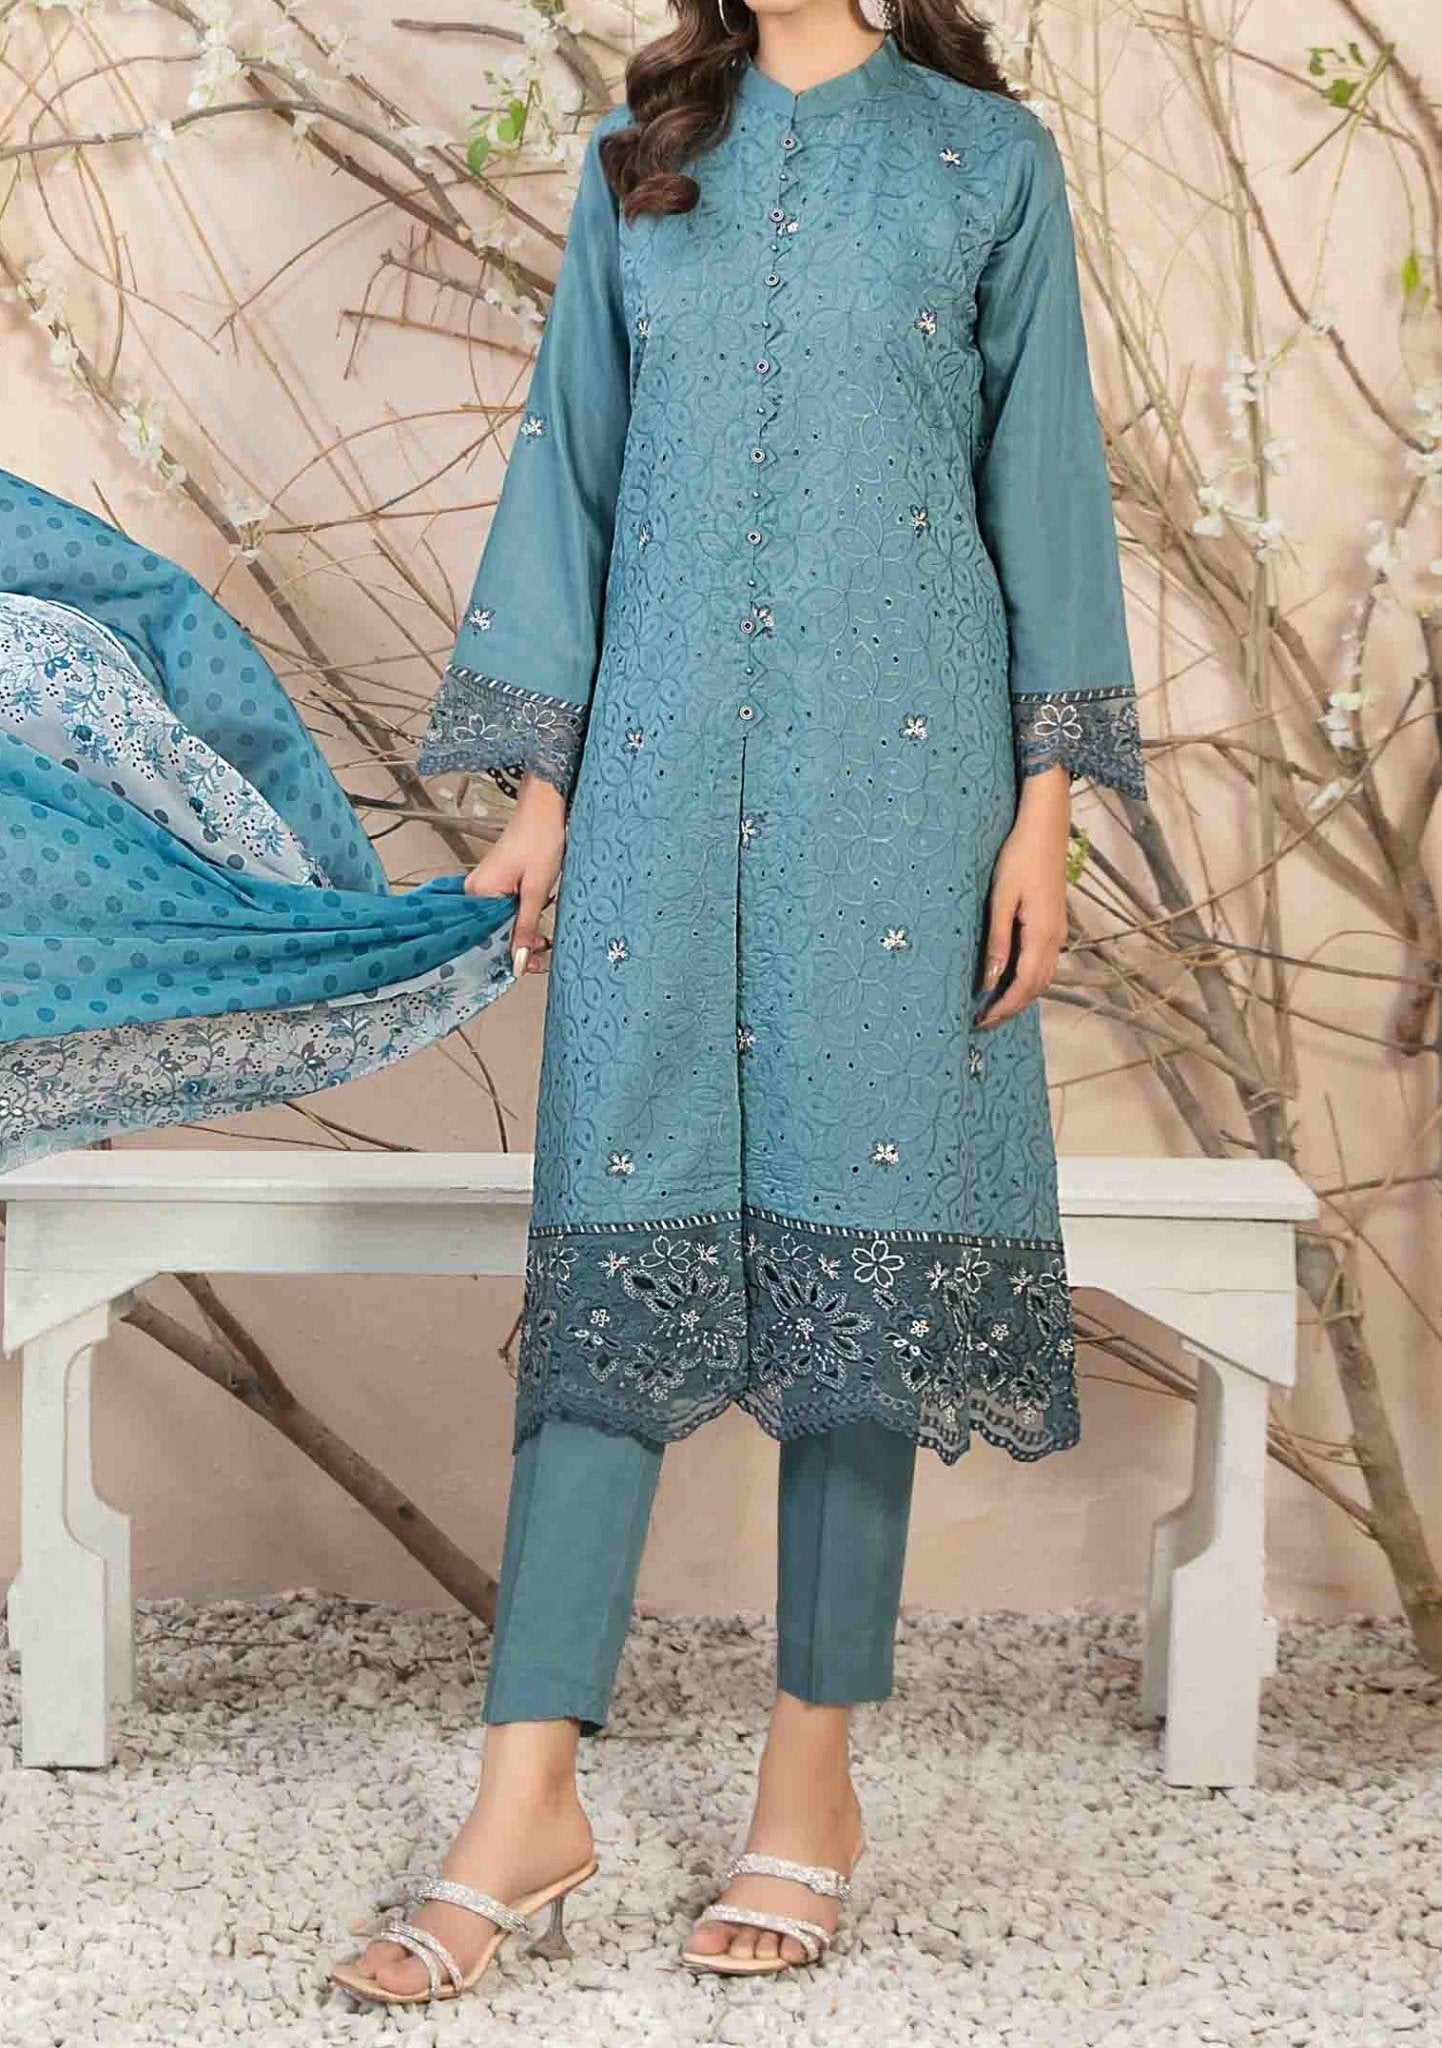 Embroidered Velvet Kurti in Blue Design 2021 Online in Pakistan